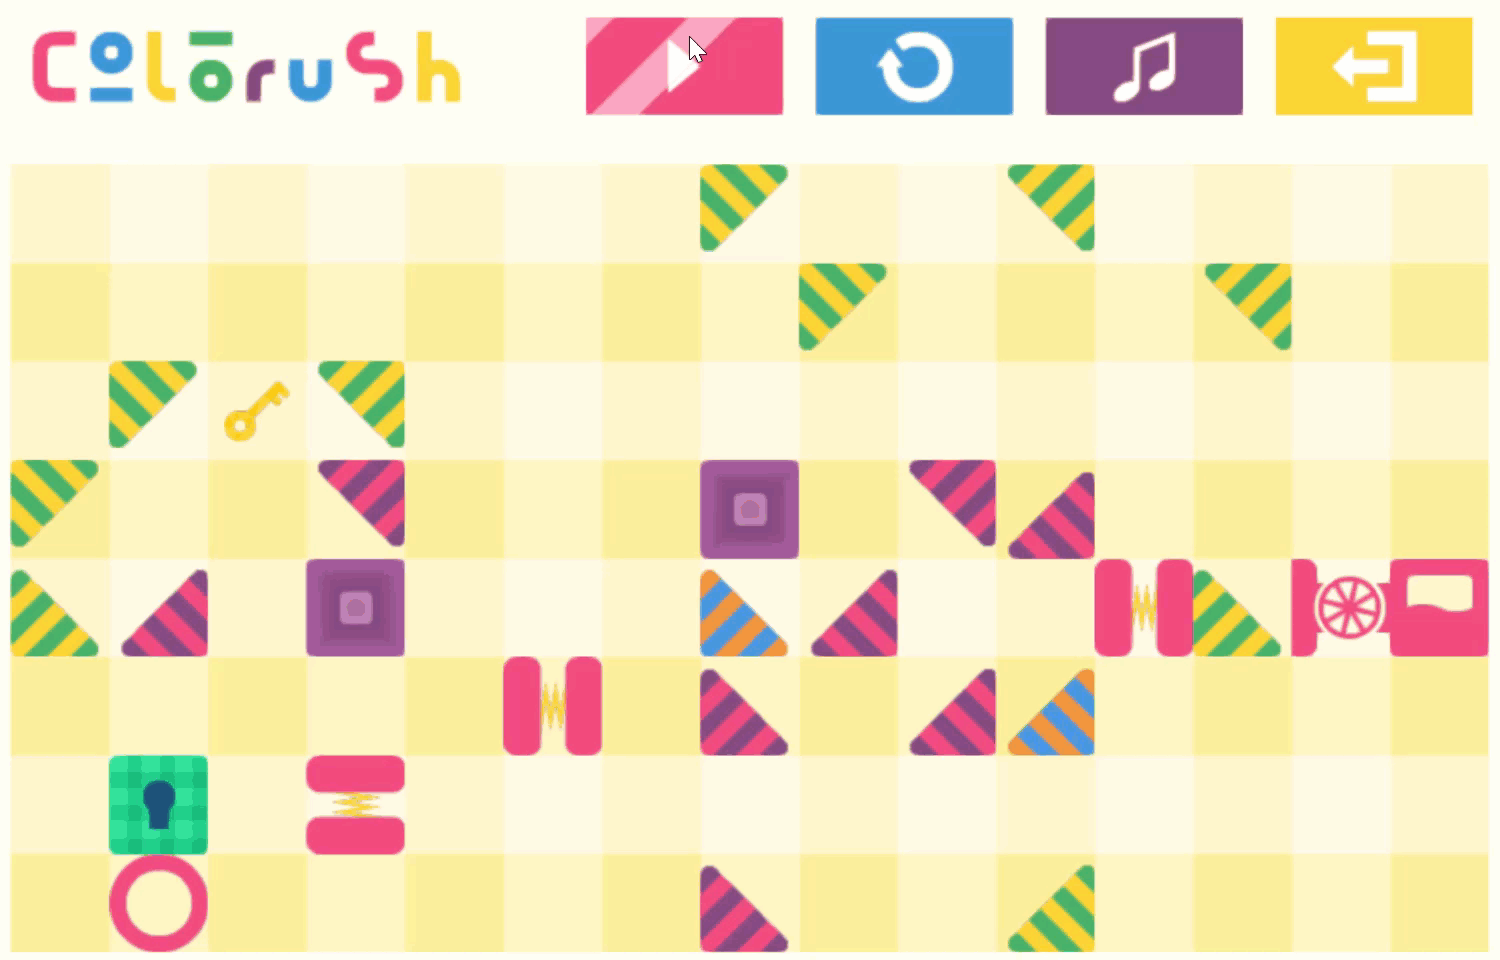 Colorush Game Level 28 Screenshot.